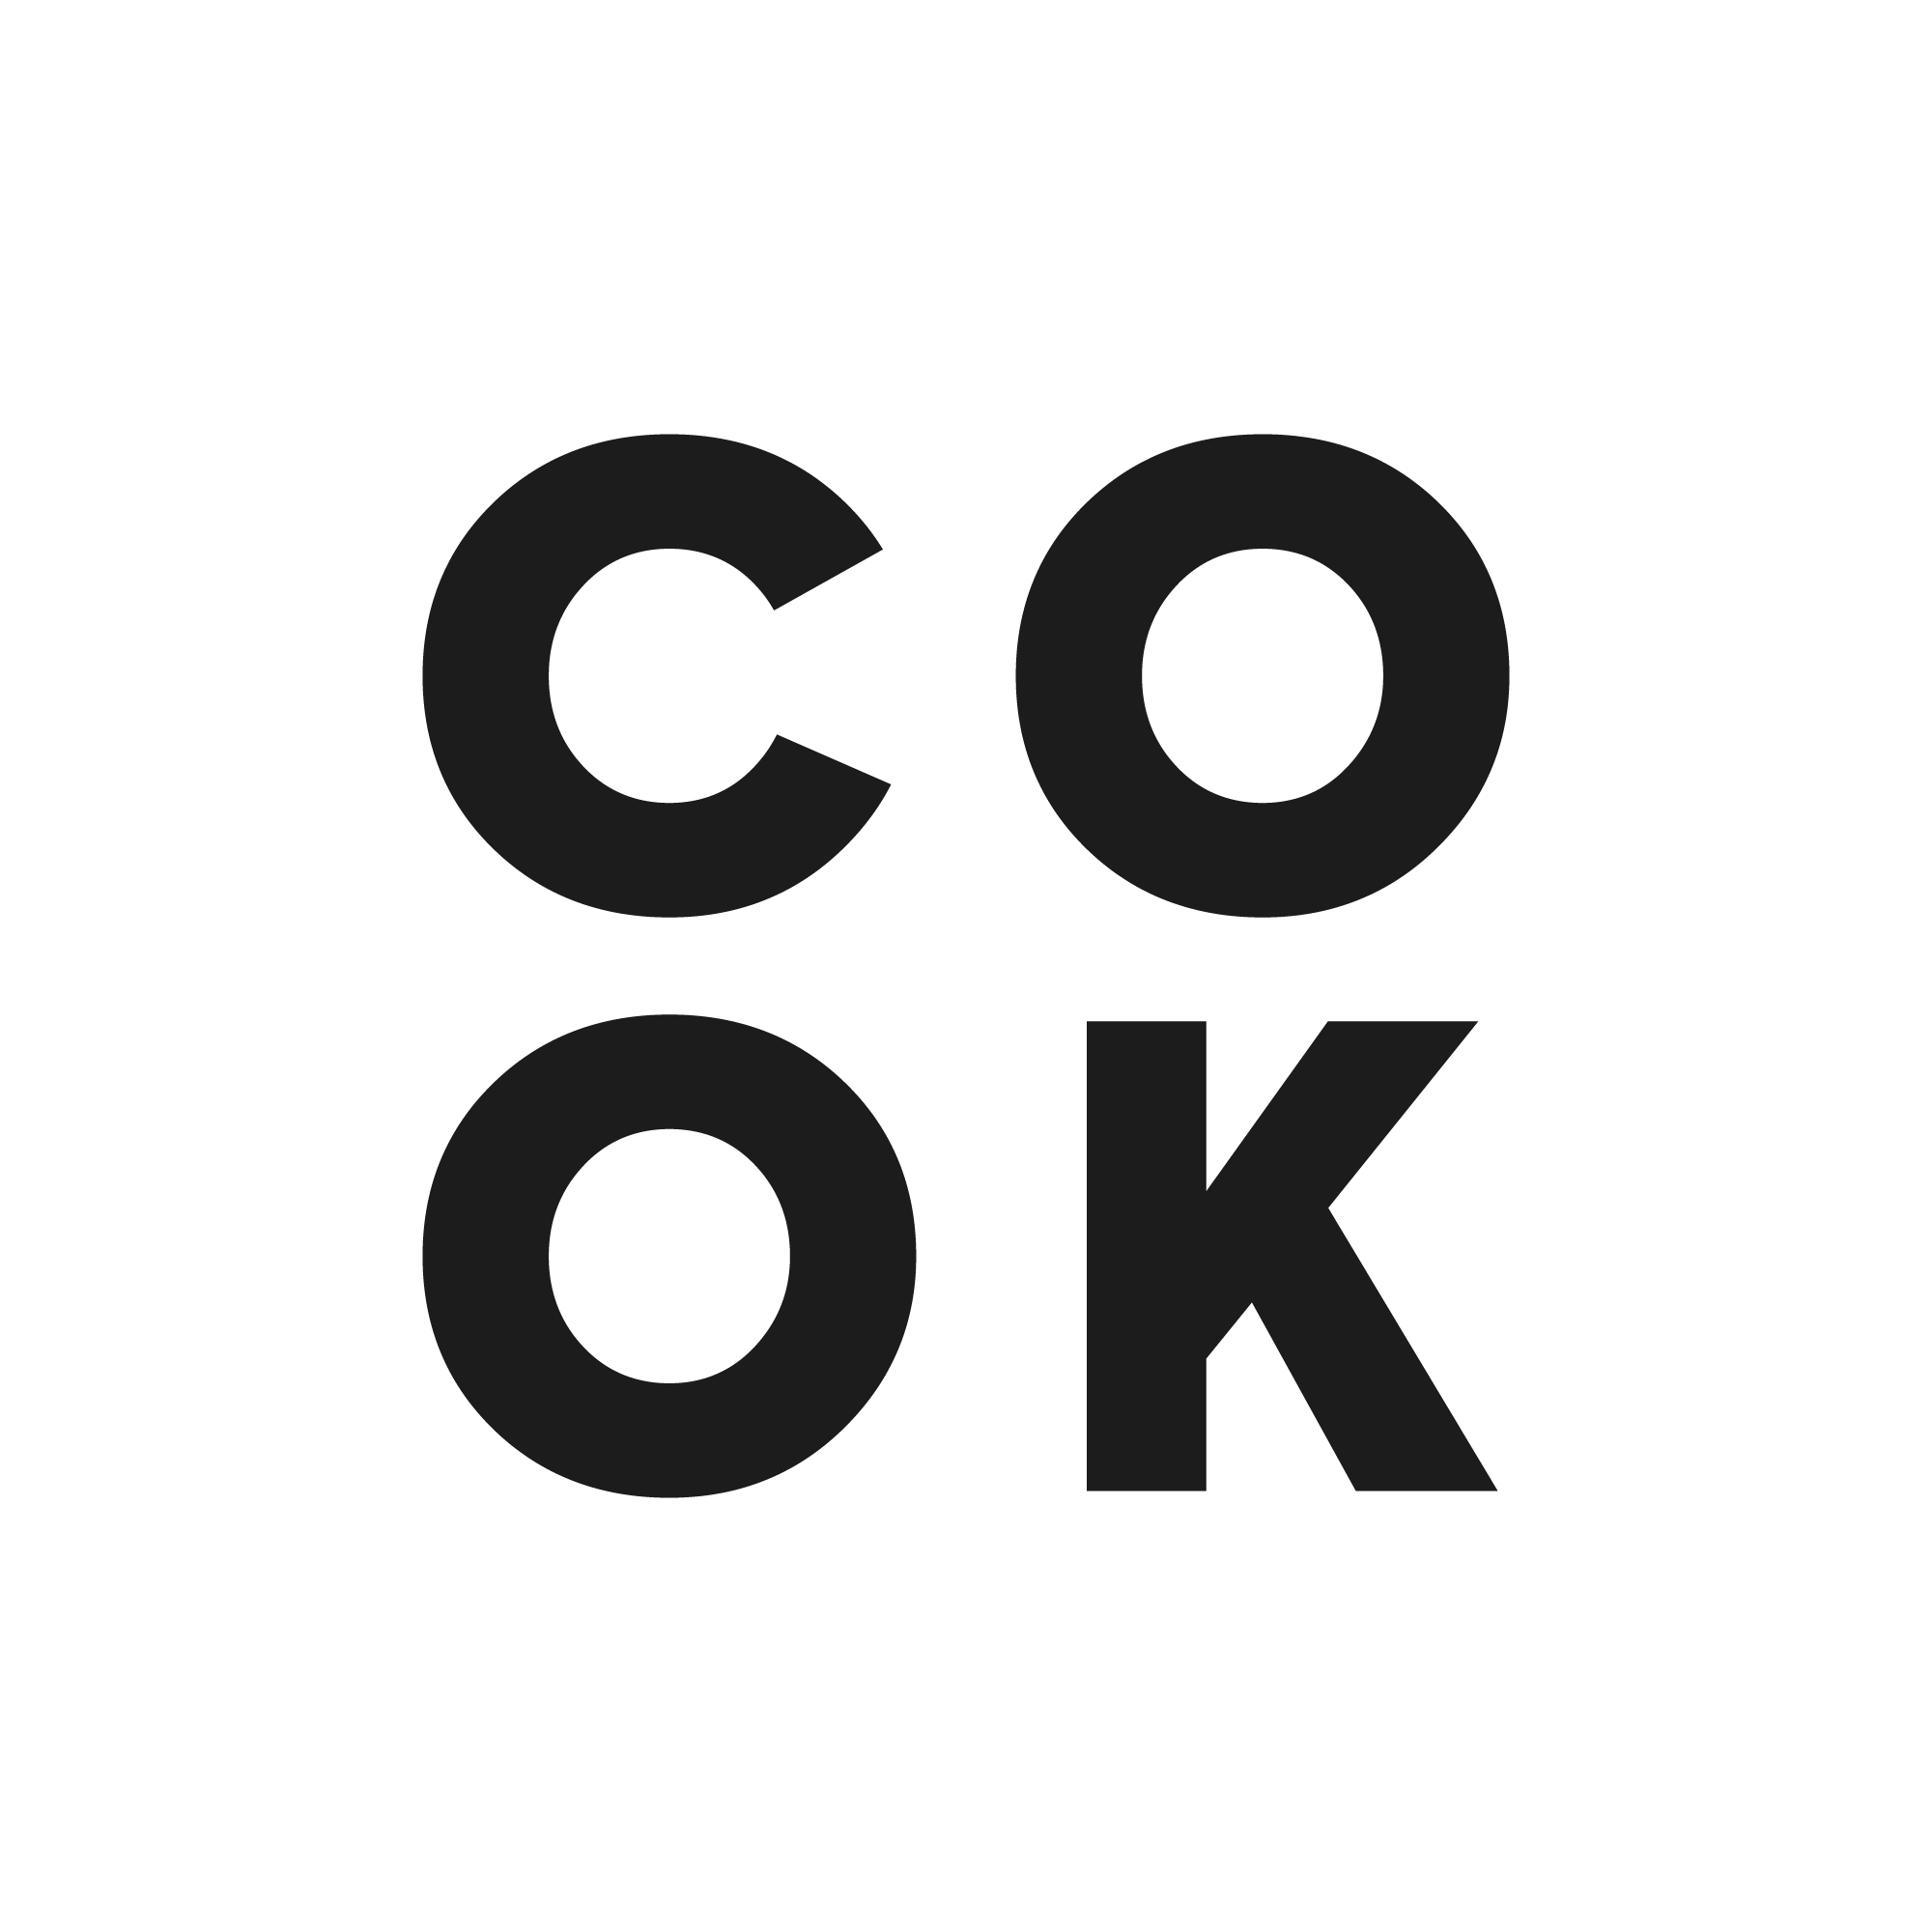 COOK Animation Studio - Fede Cook freelance 2D animator, explainer videos, motion graphics, branding and logo animation